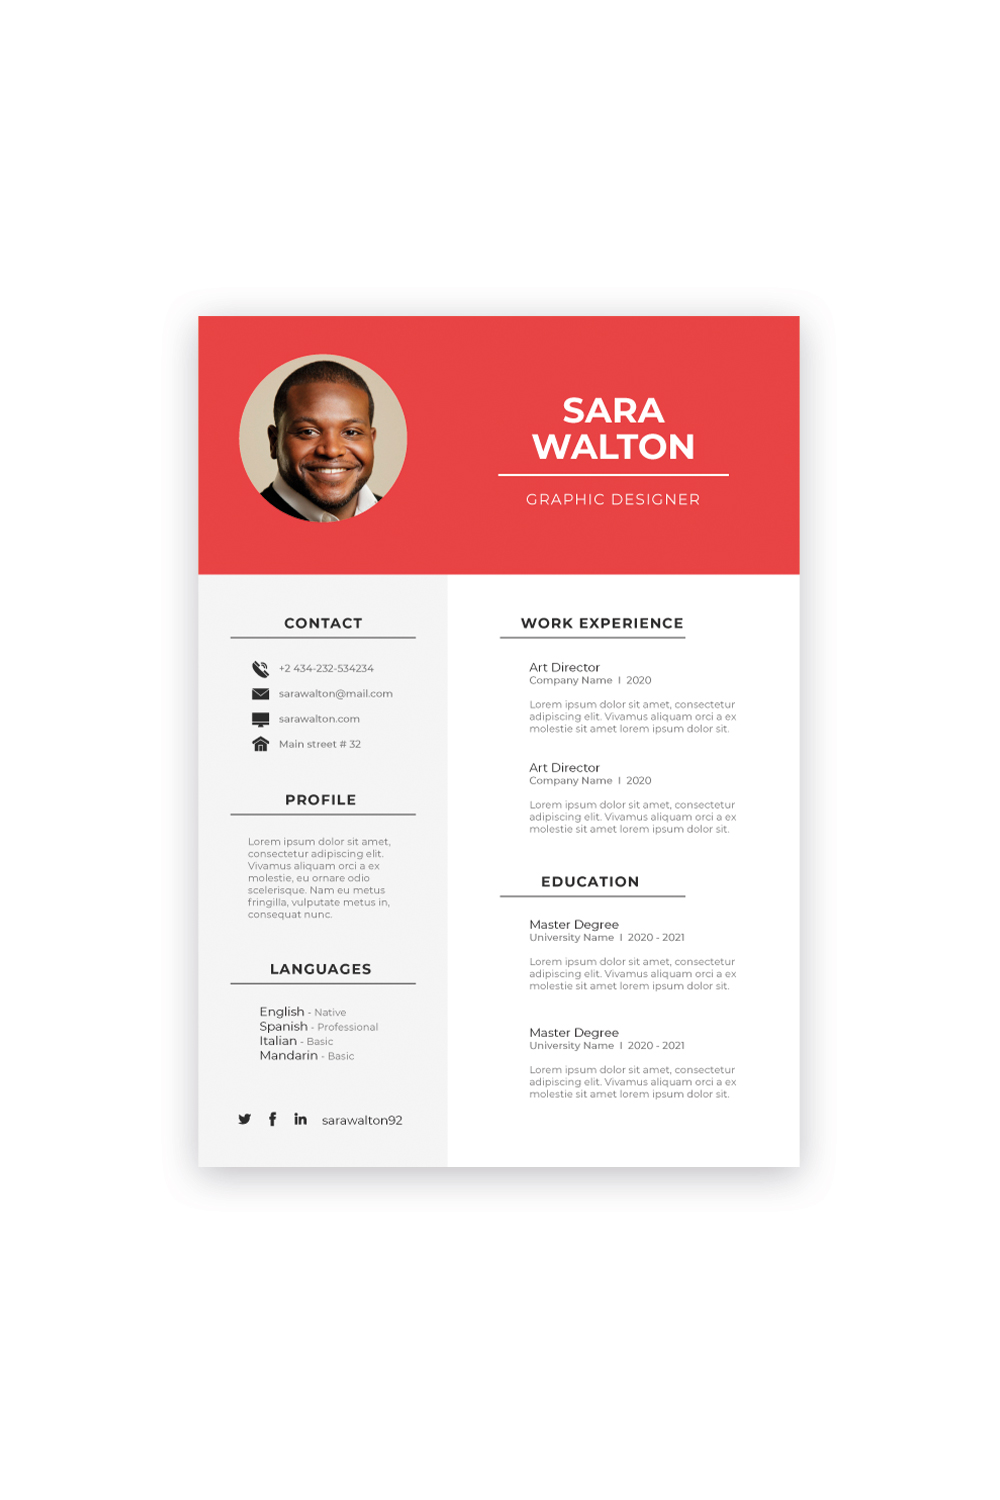 CV Resume For Graphic Designer pinterest preview image.